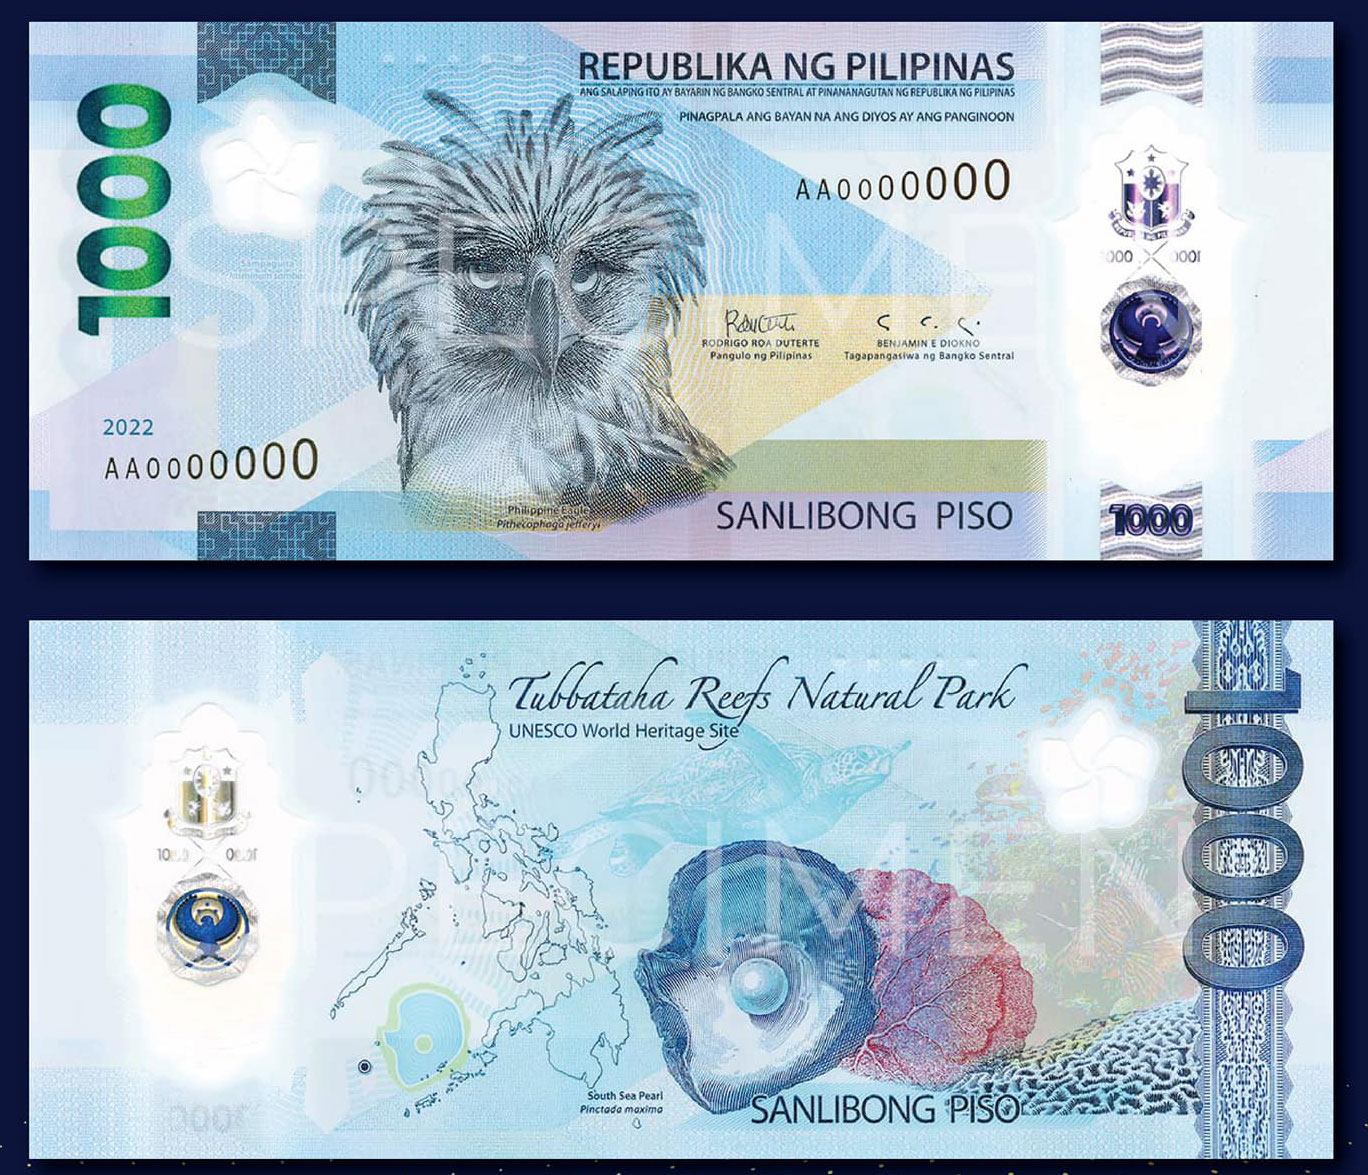 Philippine P1000 Banknotes Now Dirtproof & Waterproof Camella Homes